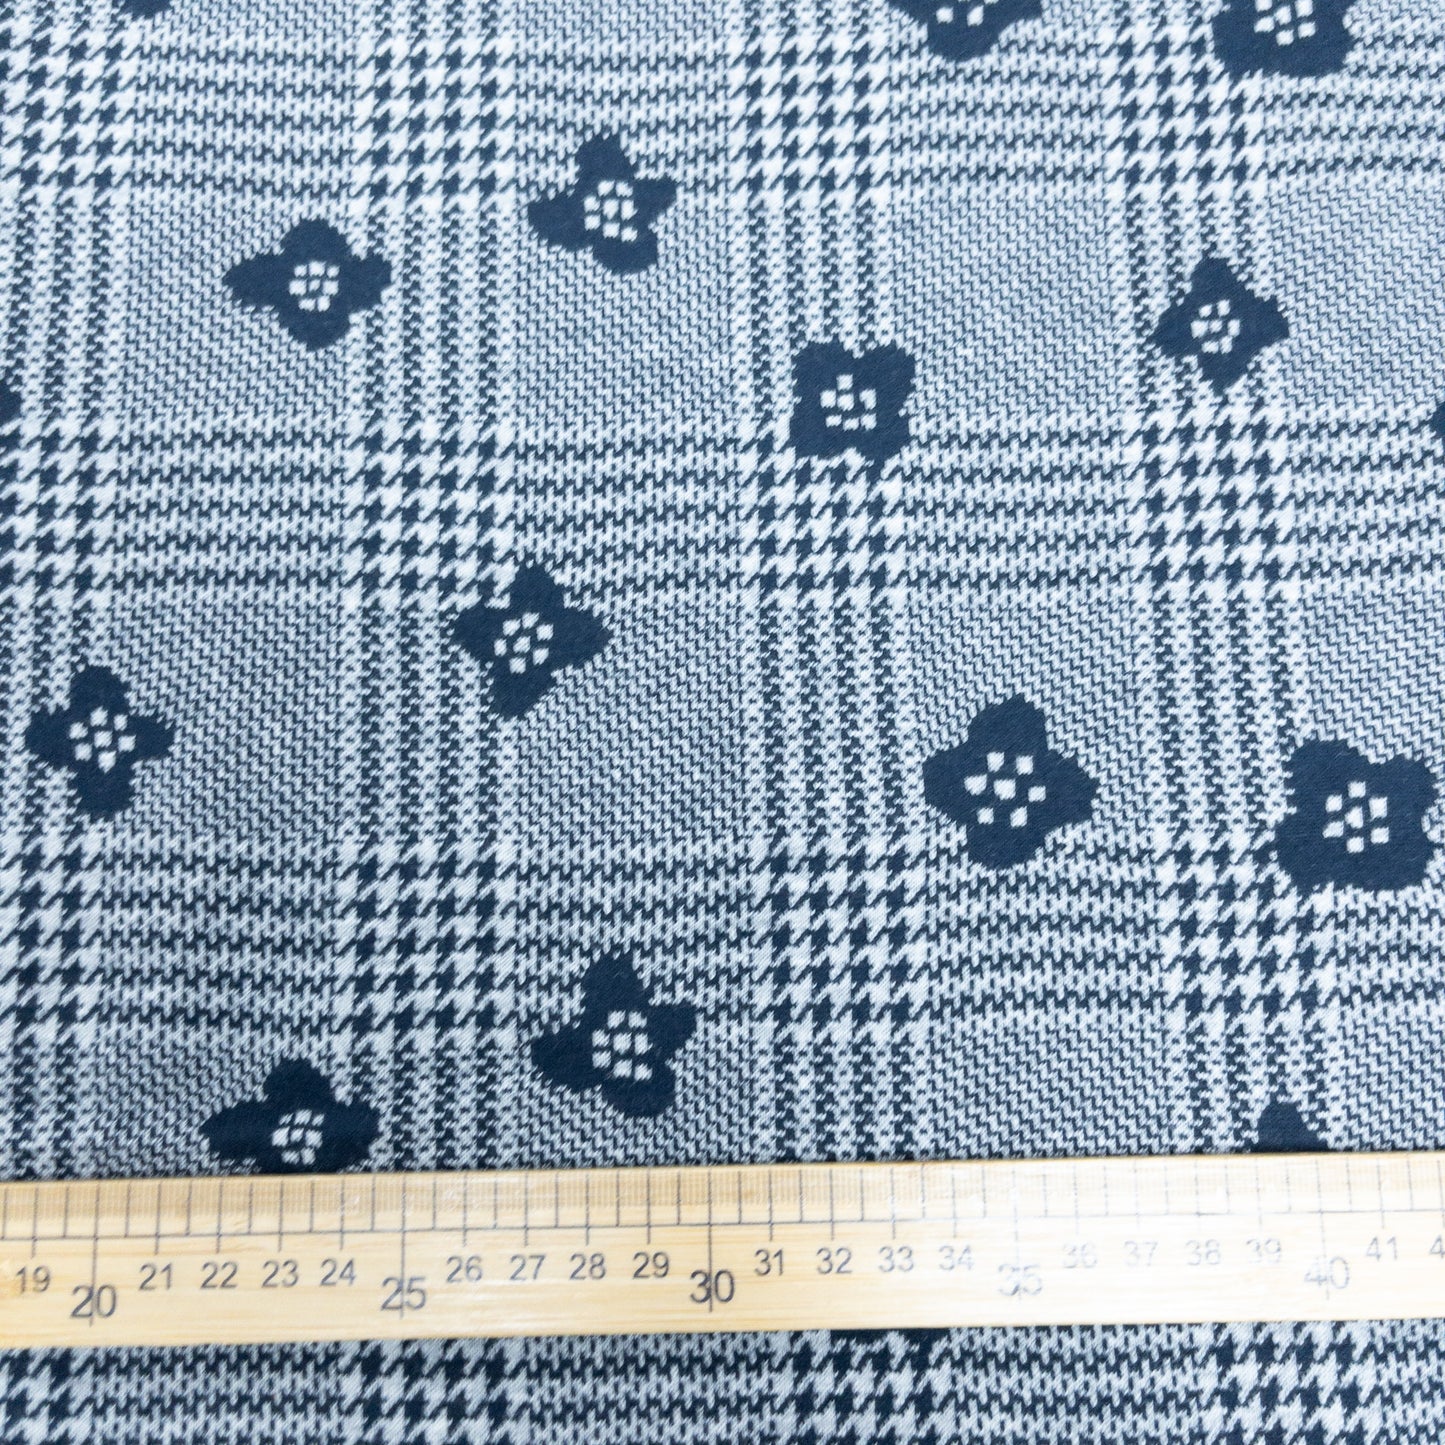 maffon | tartan floral navy gray 英倫格紋花卉 深藍+灰色 | cotton jacquard knit 雙面純棉提花針織 - 160cm